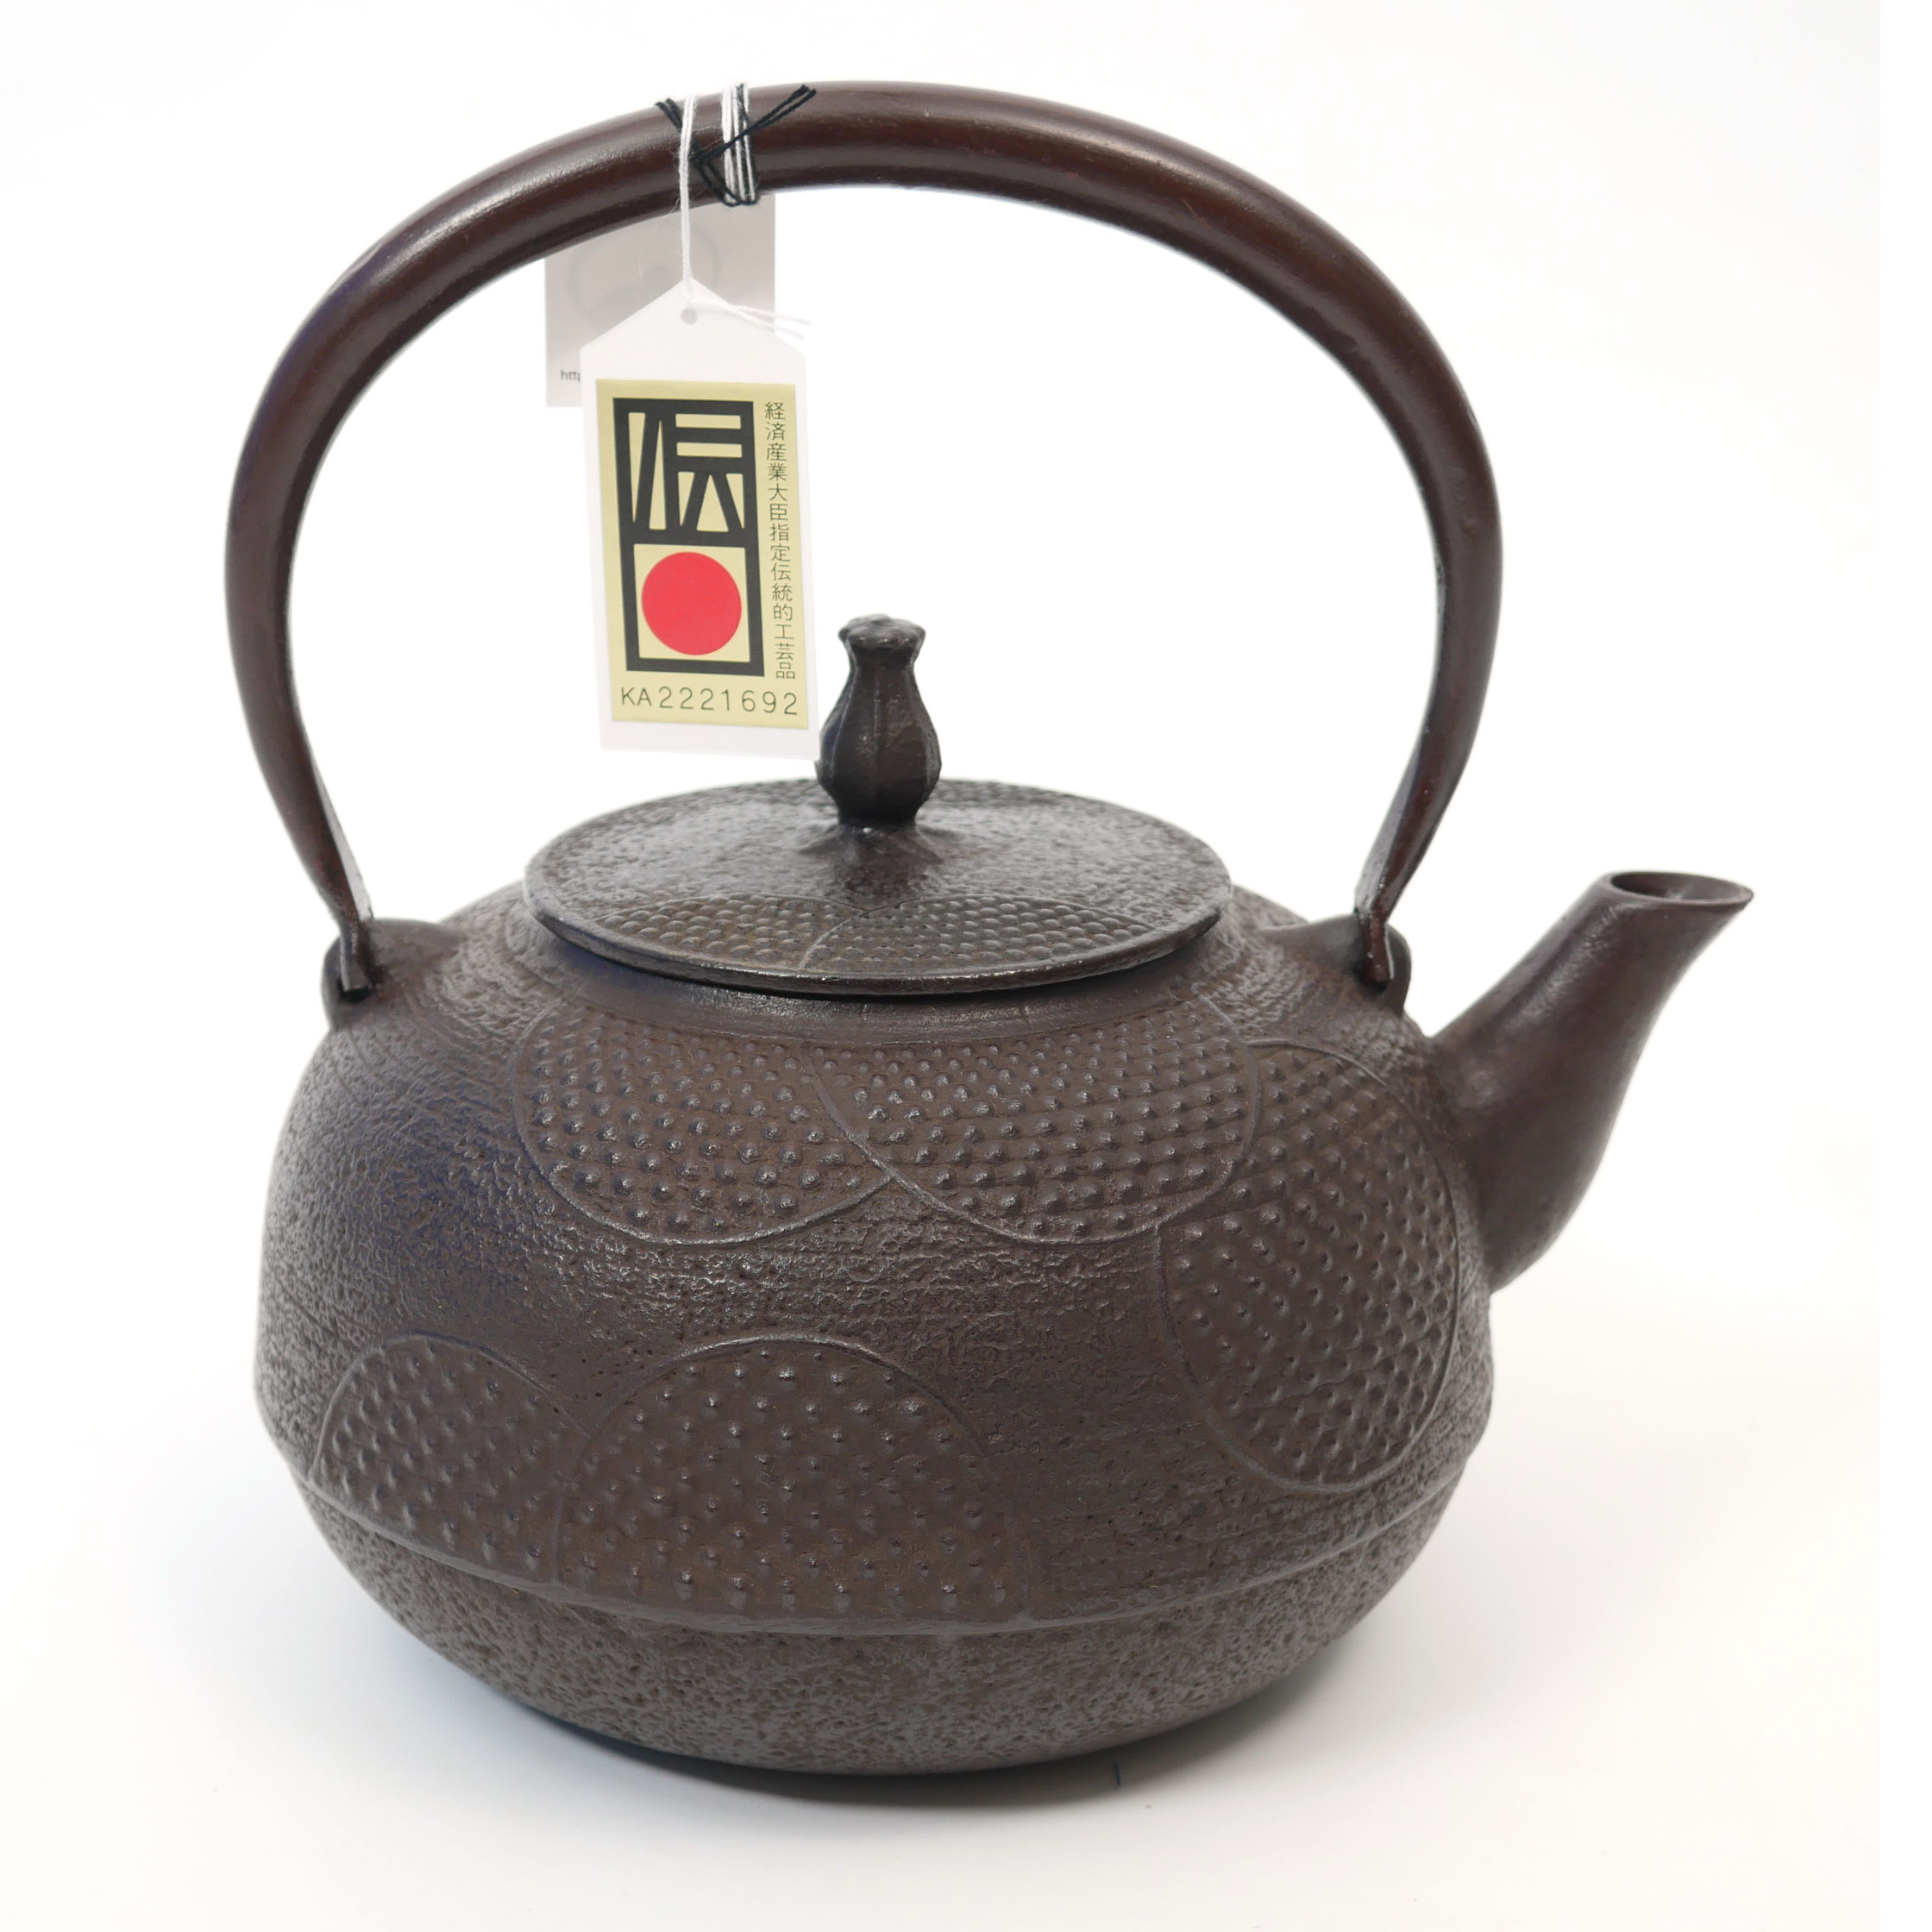 Oumefar Bollitore da tè in Stile Giapponese Teiera in Ferro con colino da tè Bollitore da tè in ghisa da 0,3 Litri per Regalo del Padre di Famiglia 